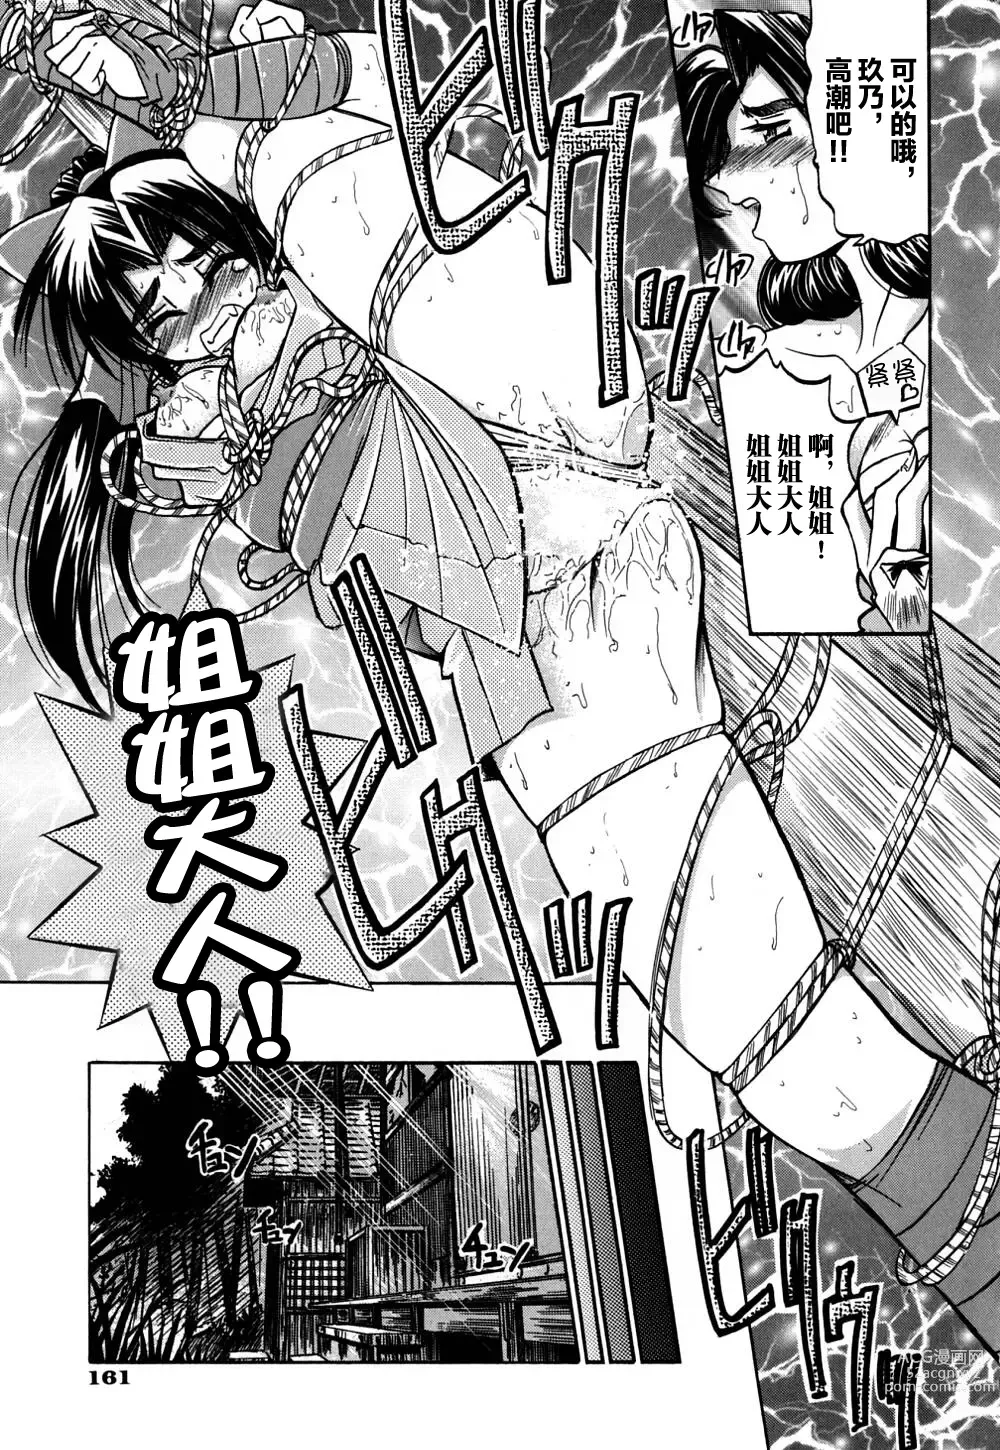 Page 168 of manga Ground Ero